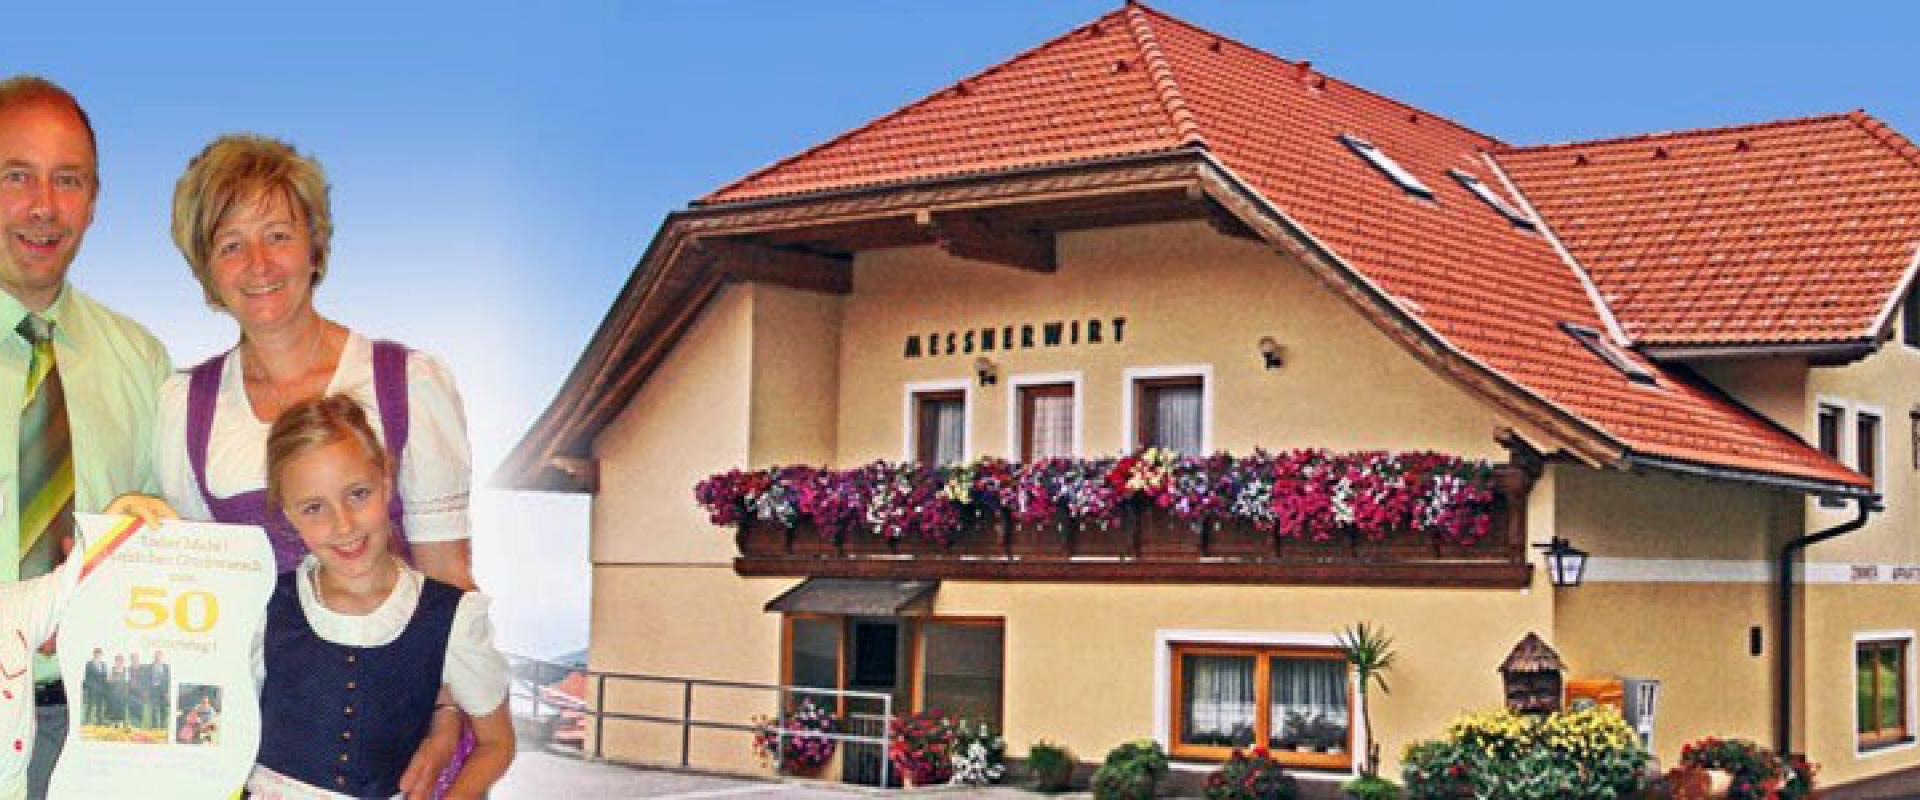 14757 Biker Hotel Messnerwirt in Kärnten.jpg